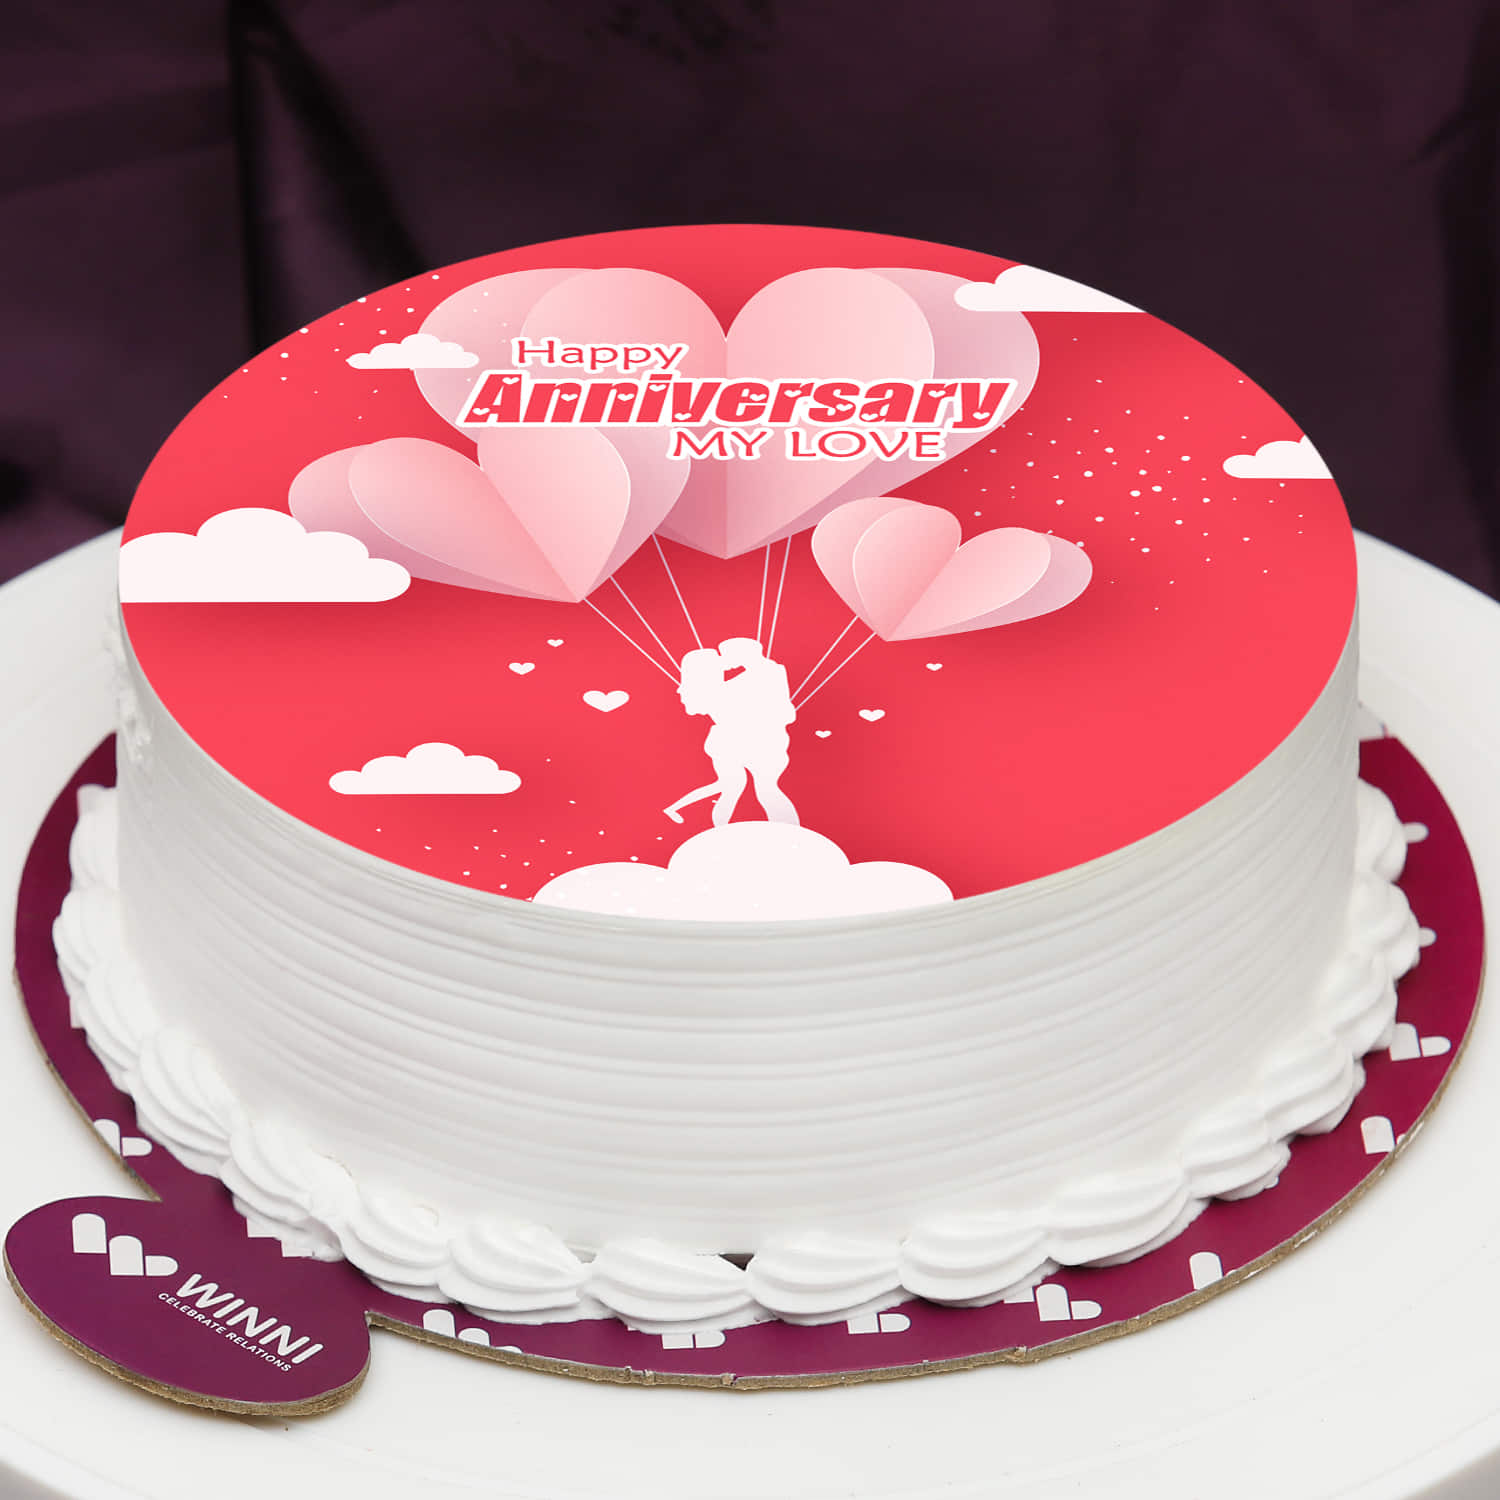 Best Heart Shaped Anniversary Cake In Pune | Order Online